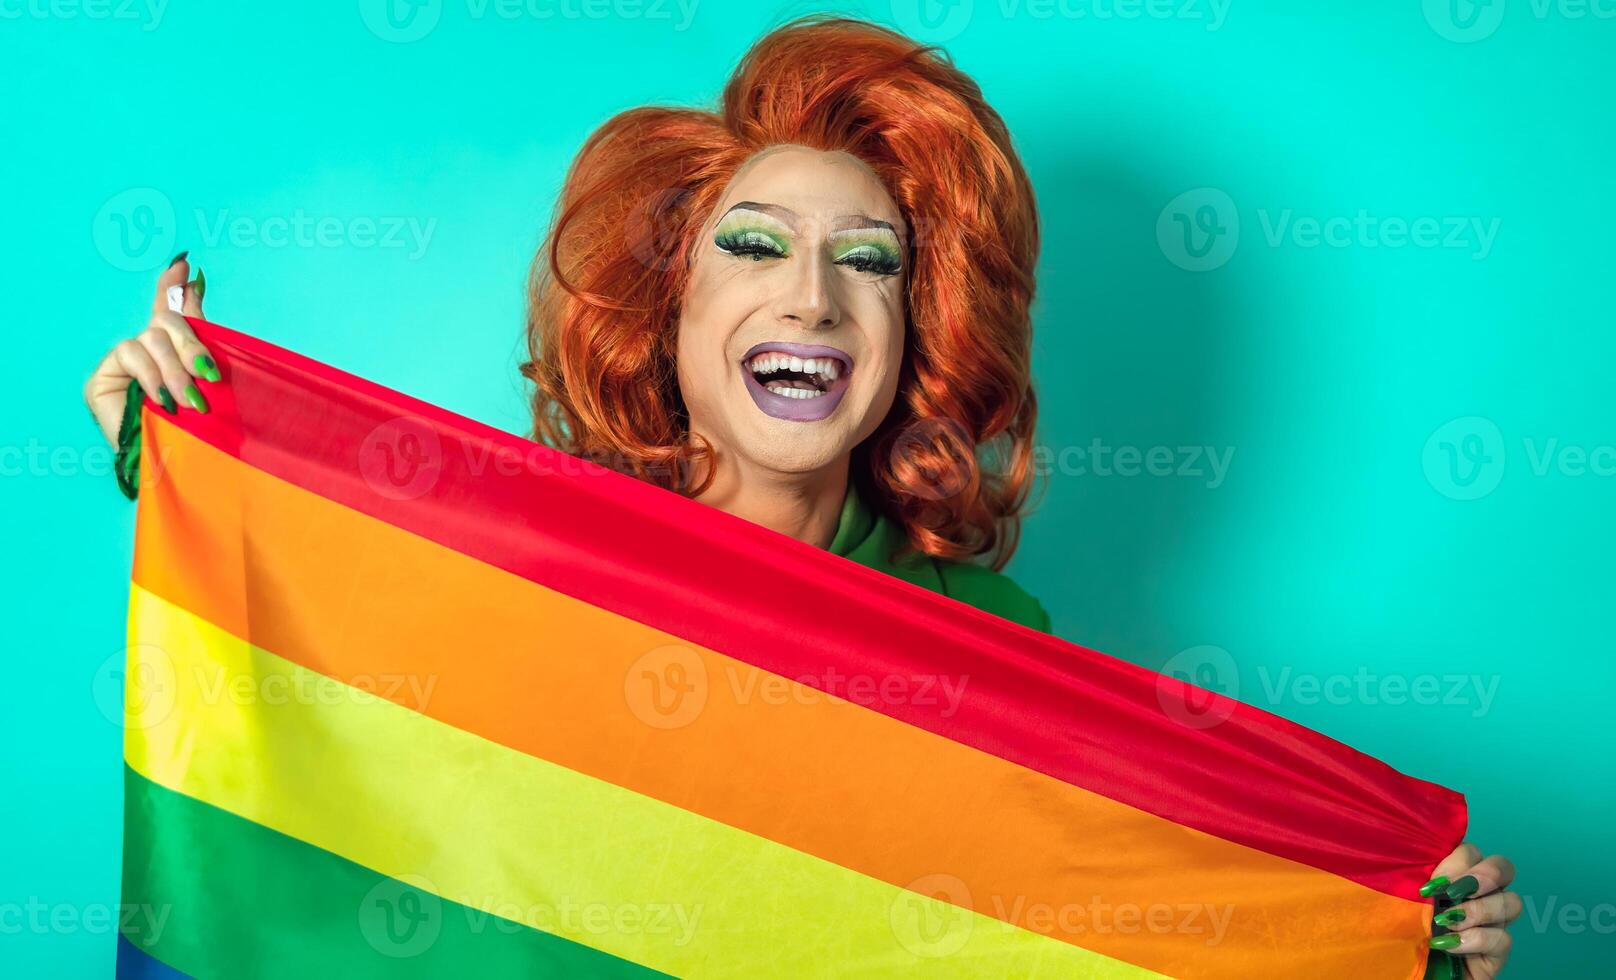 Happy drag queen celebrating gay pride holding rainbow flag symbol of LGBTQ community photo